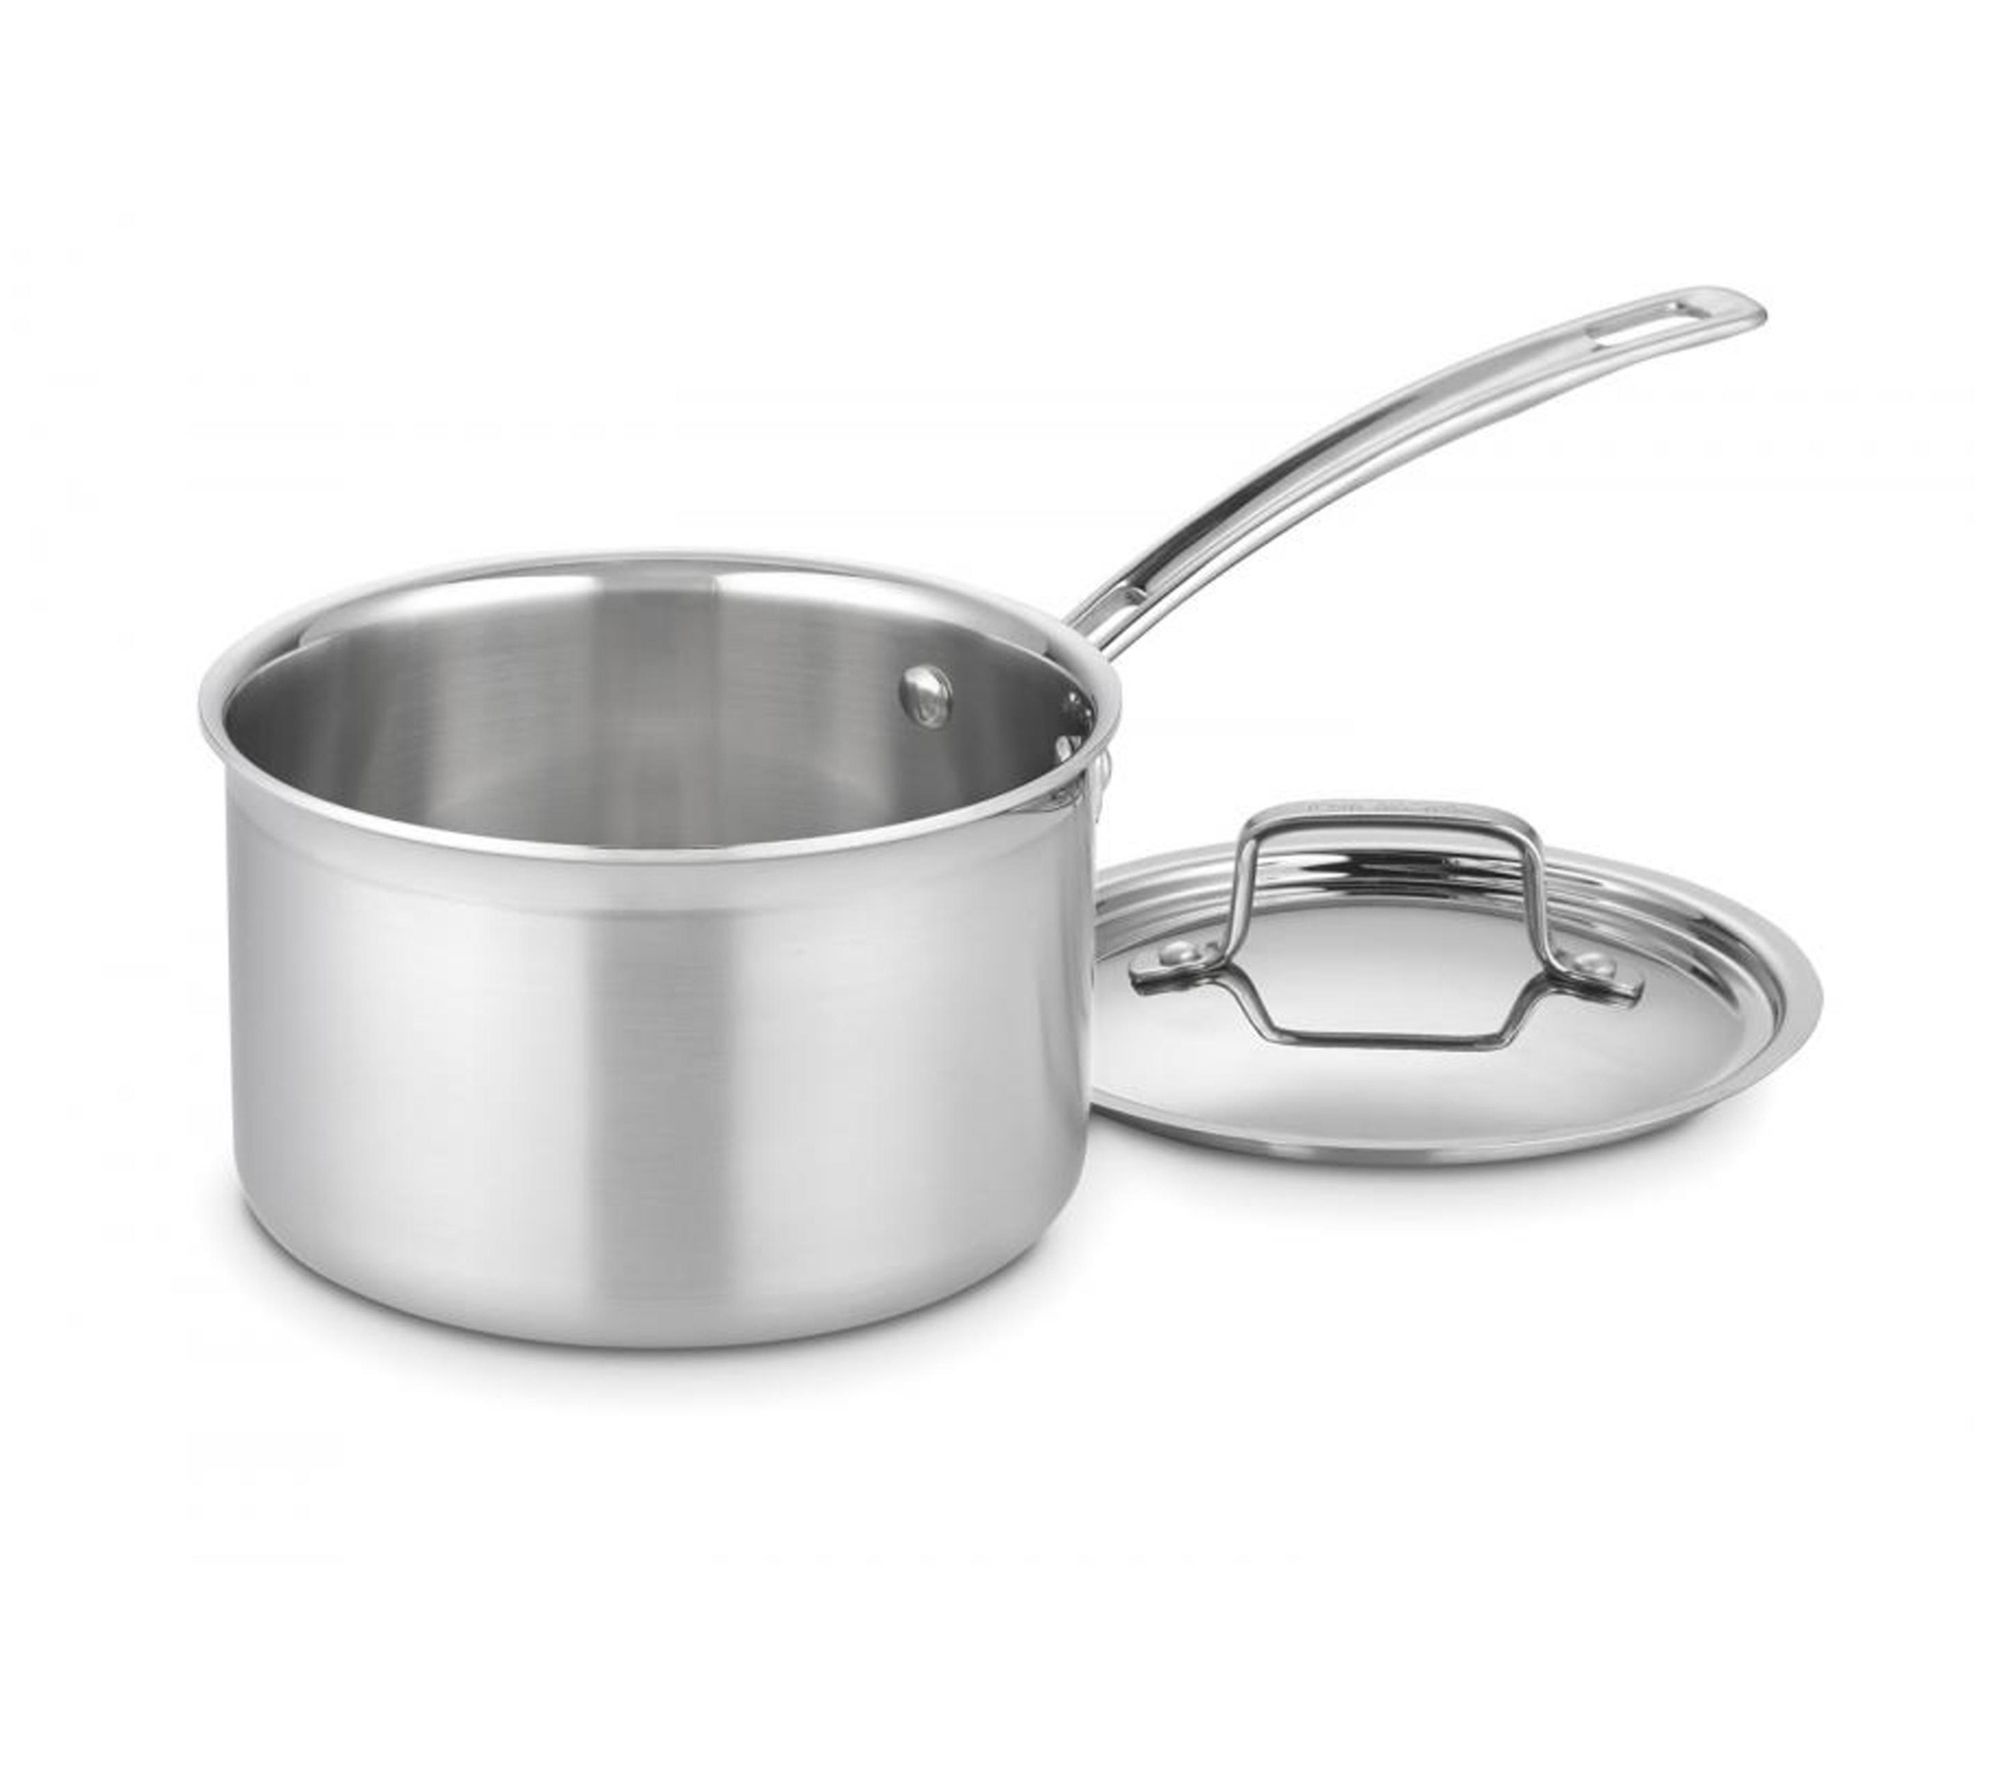 Cuisinart 3-Quart Saute Pan W/Helper & Cover, Stainless Steel